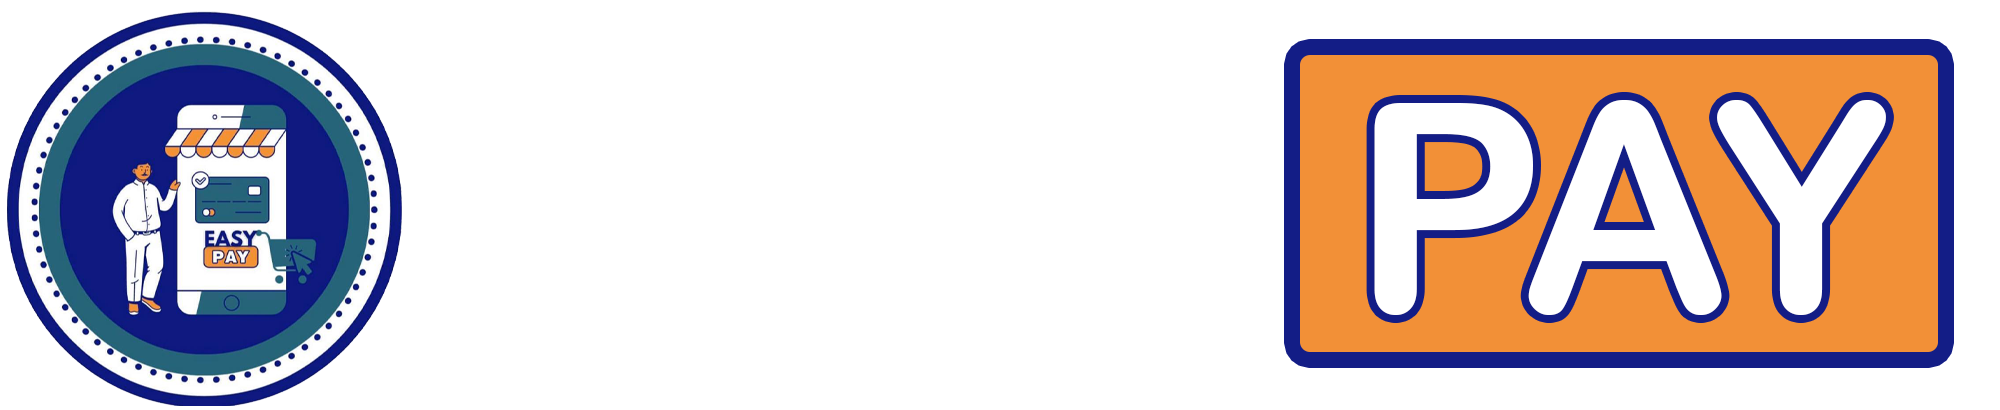 Easypaybrand